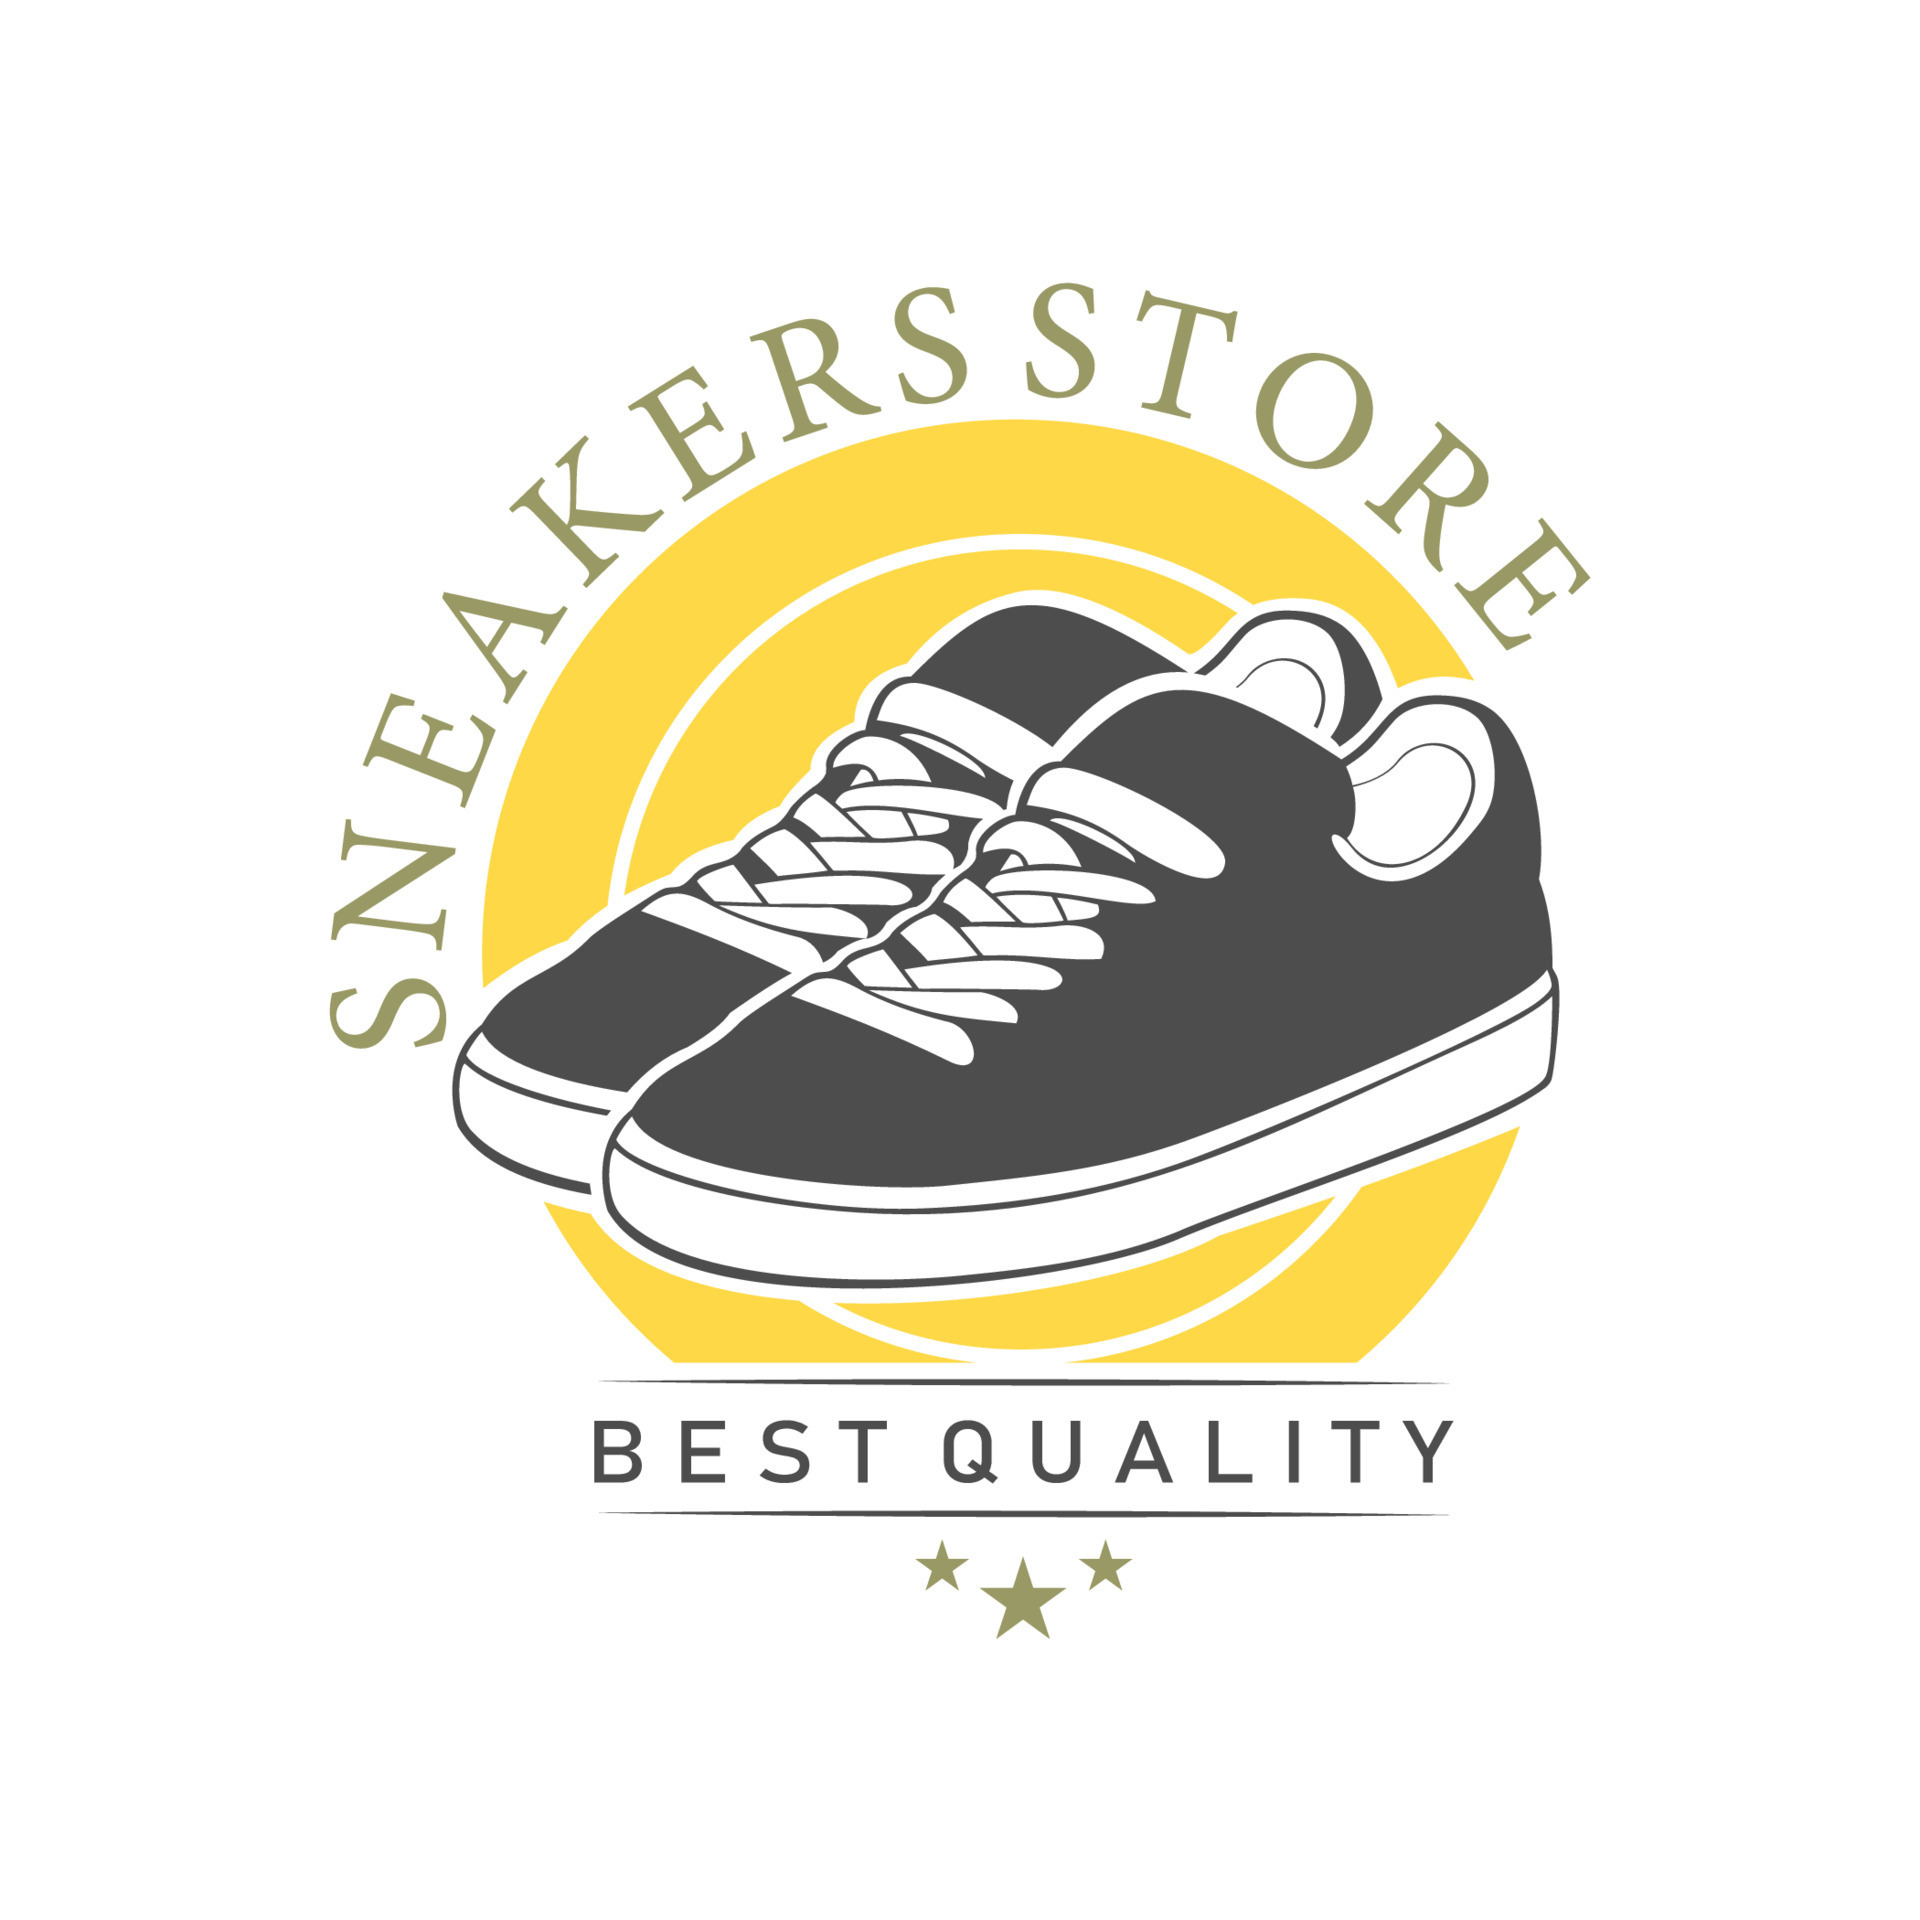 Sneakers shop logo design. Shoes store. Sneaker vector illustration